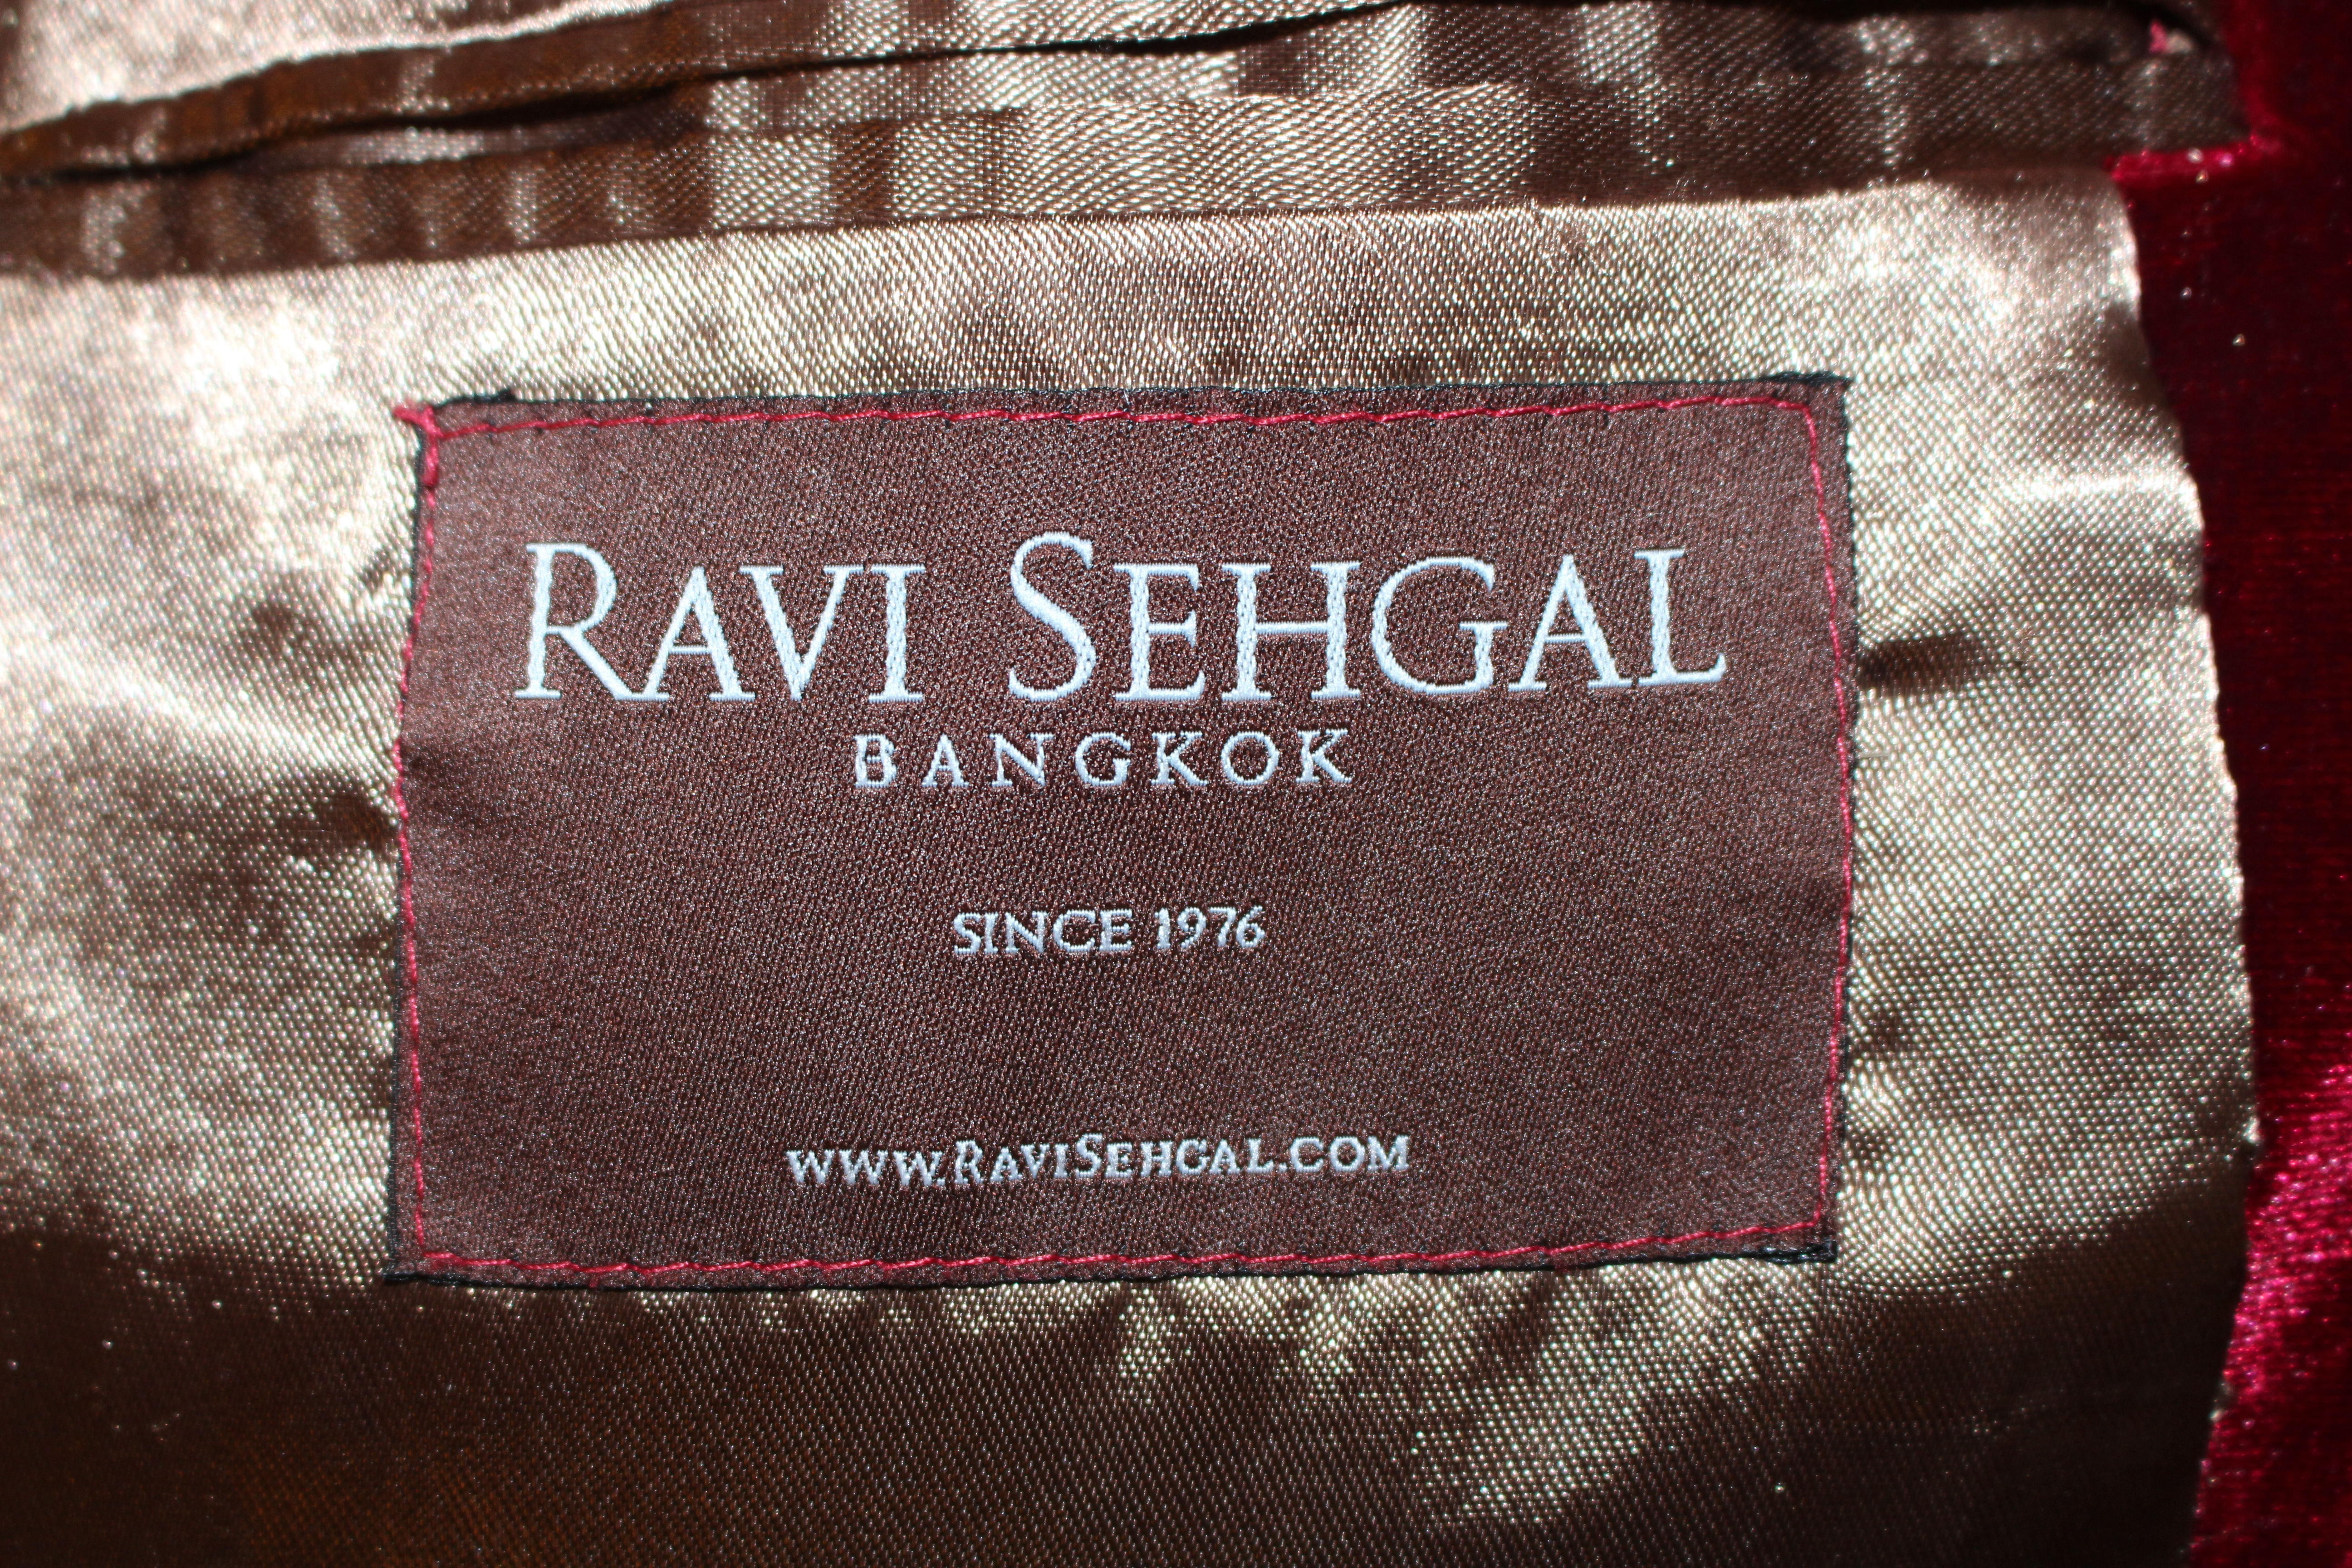 Ravi Sehgal red velvet jacket, showing label